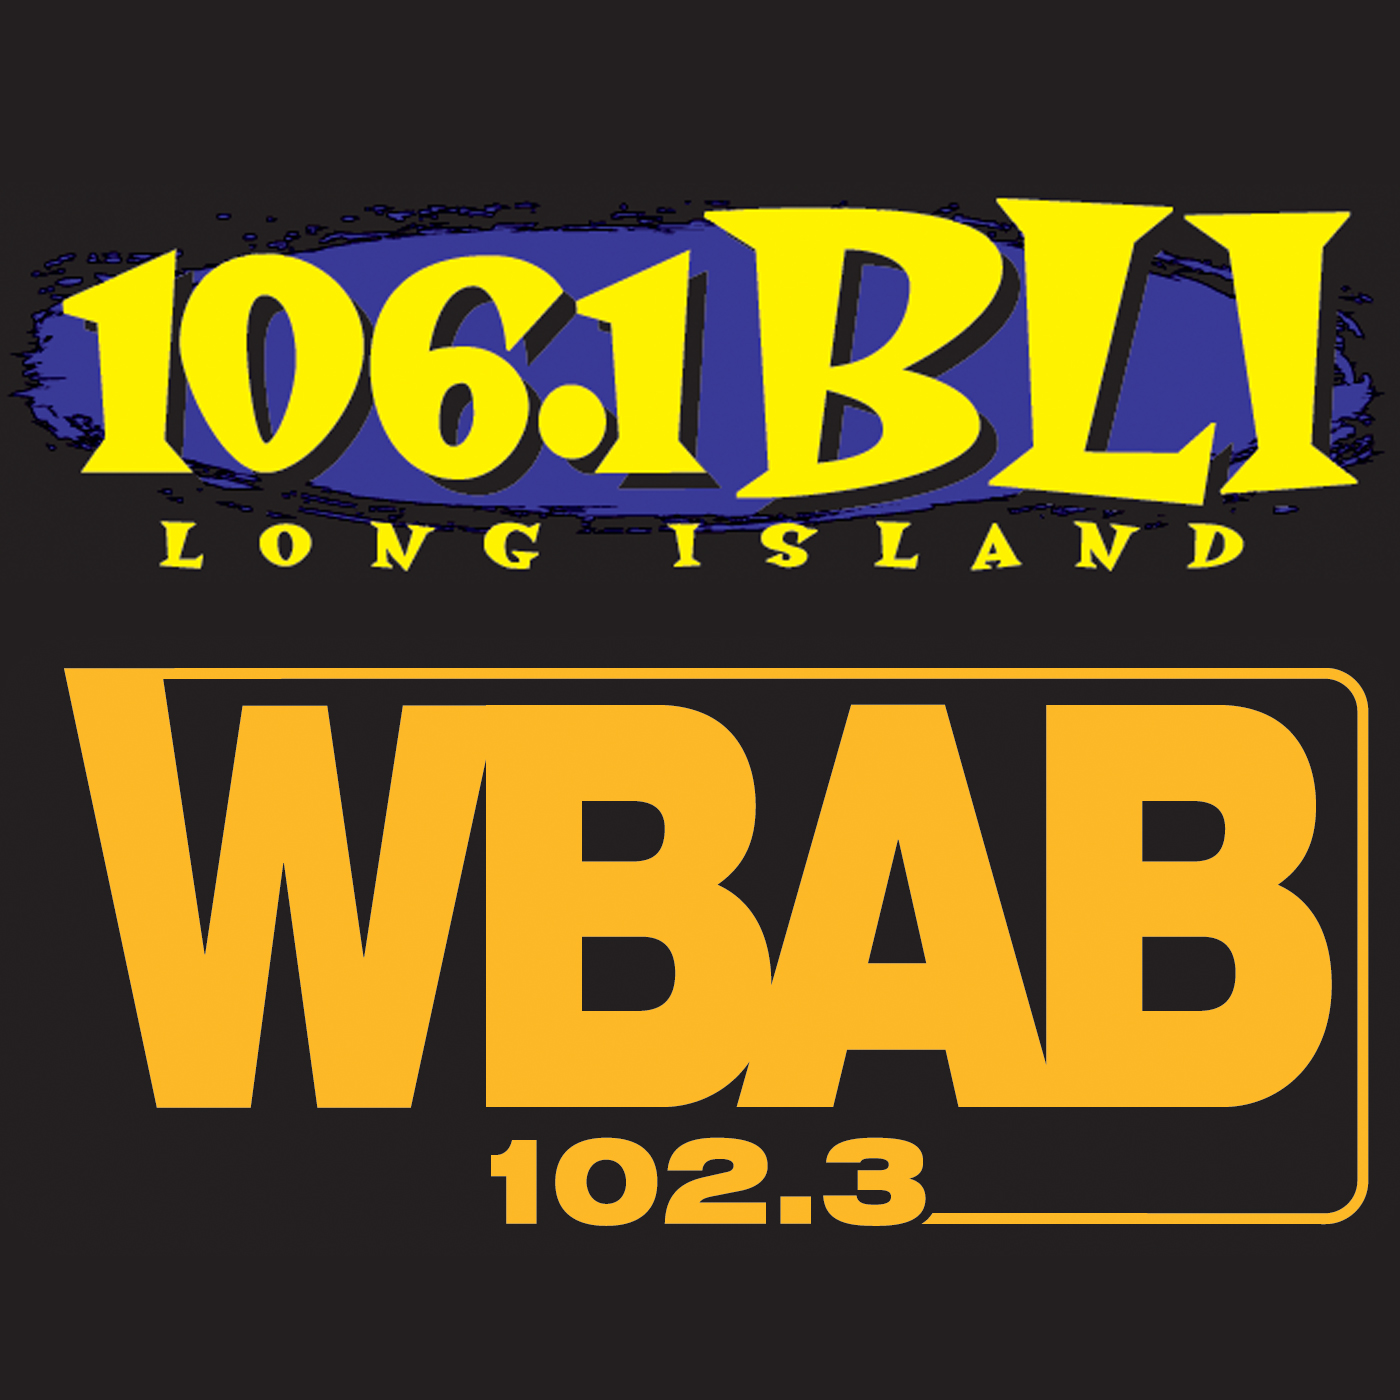 WBLI and WBAB logo